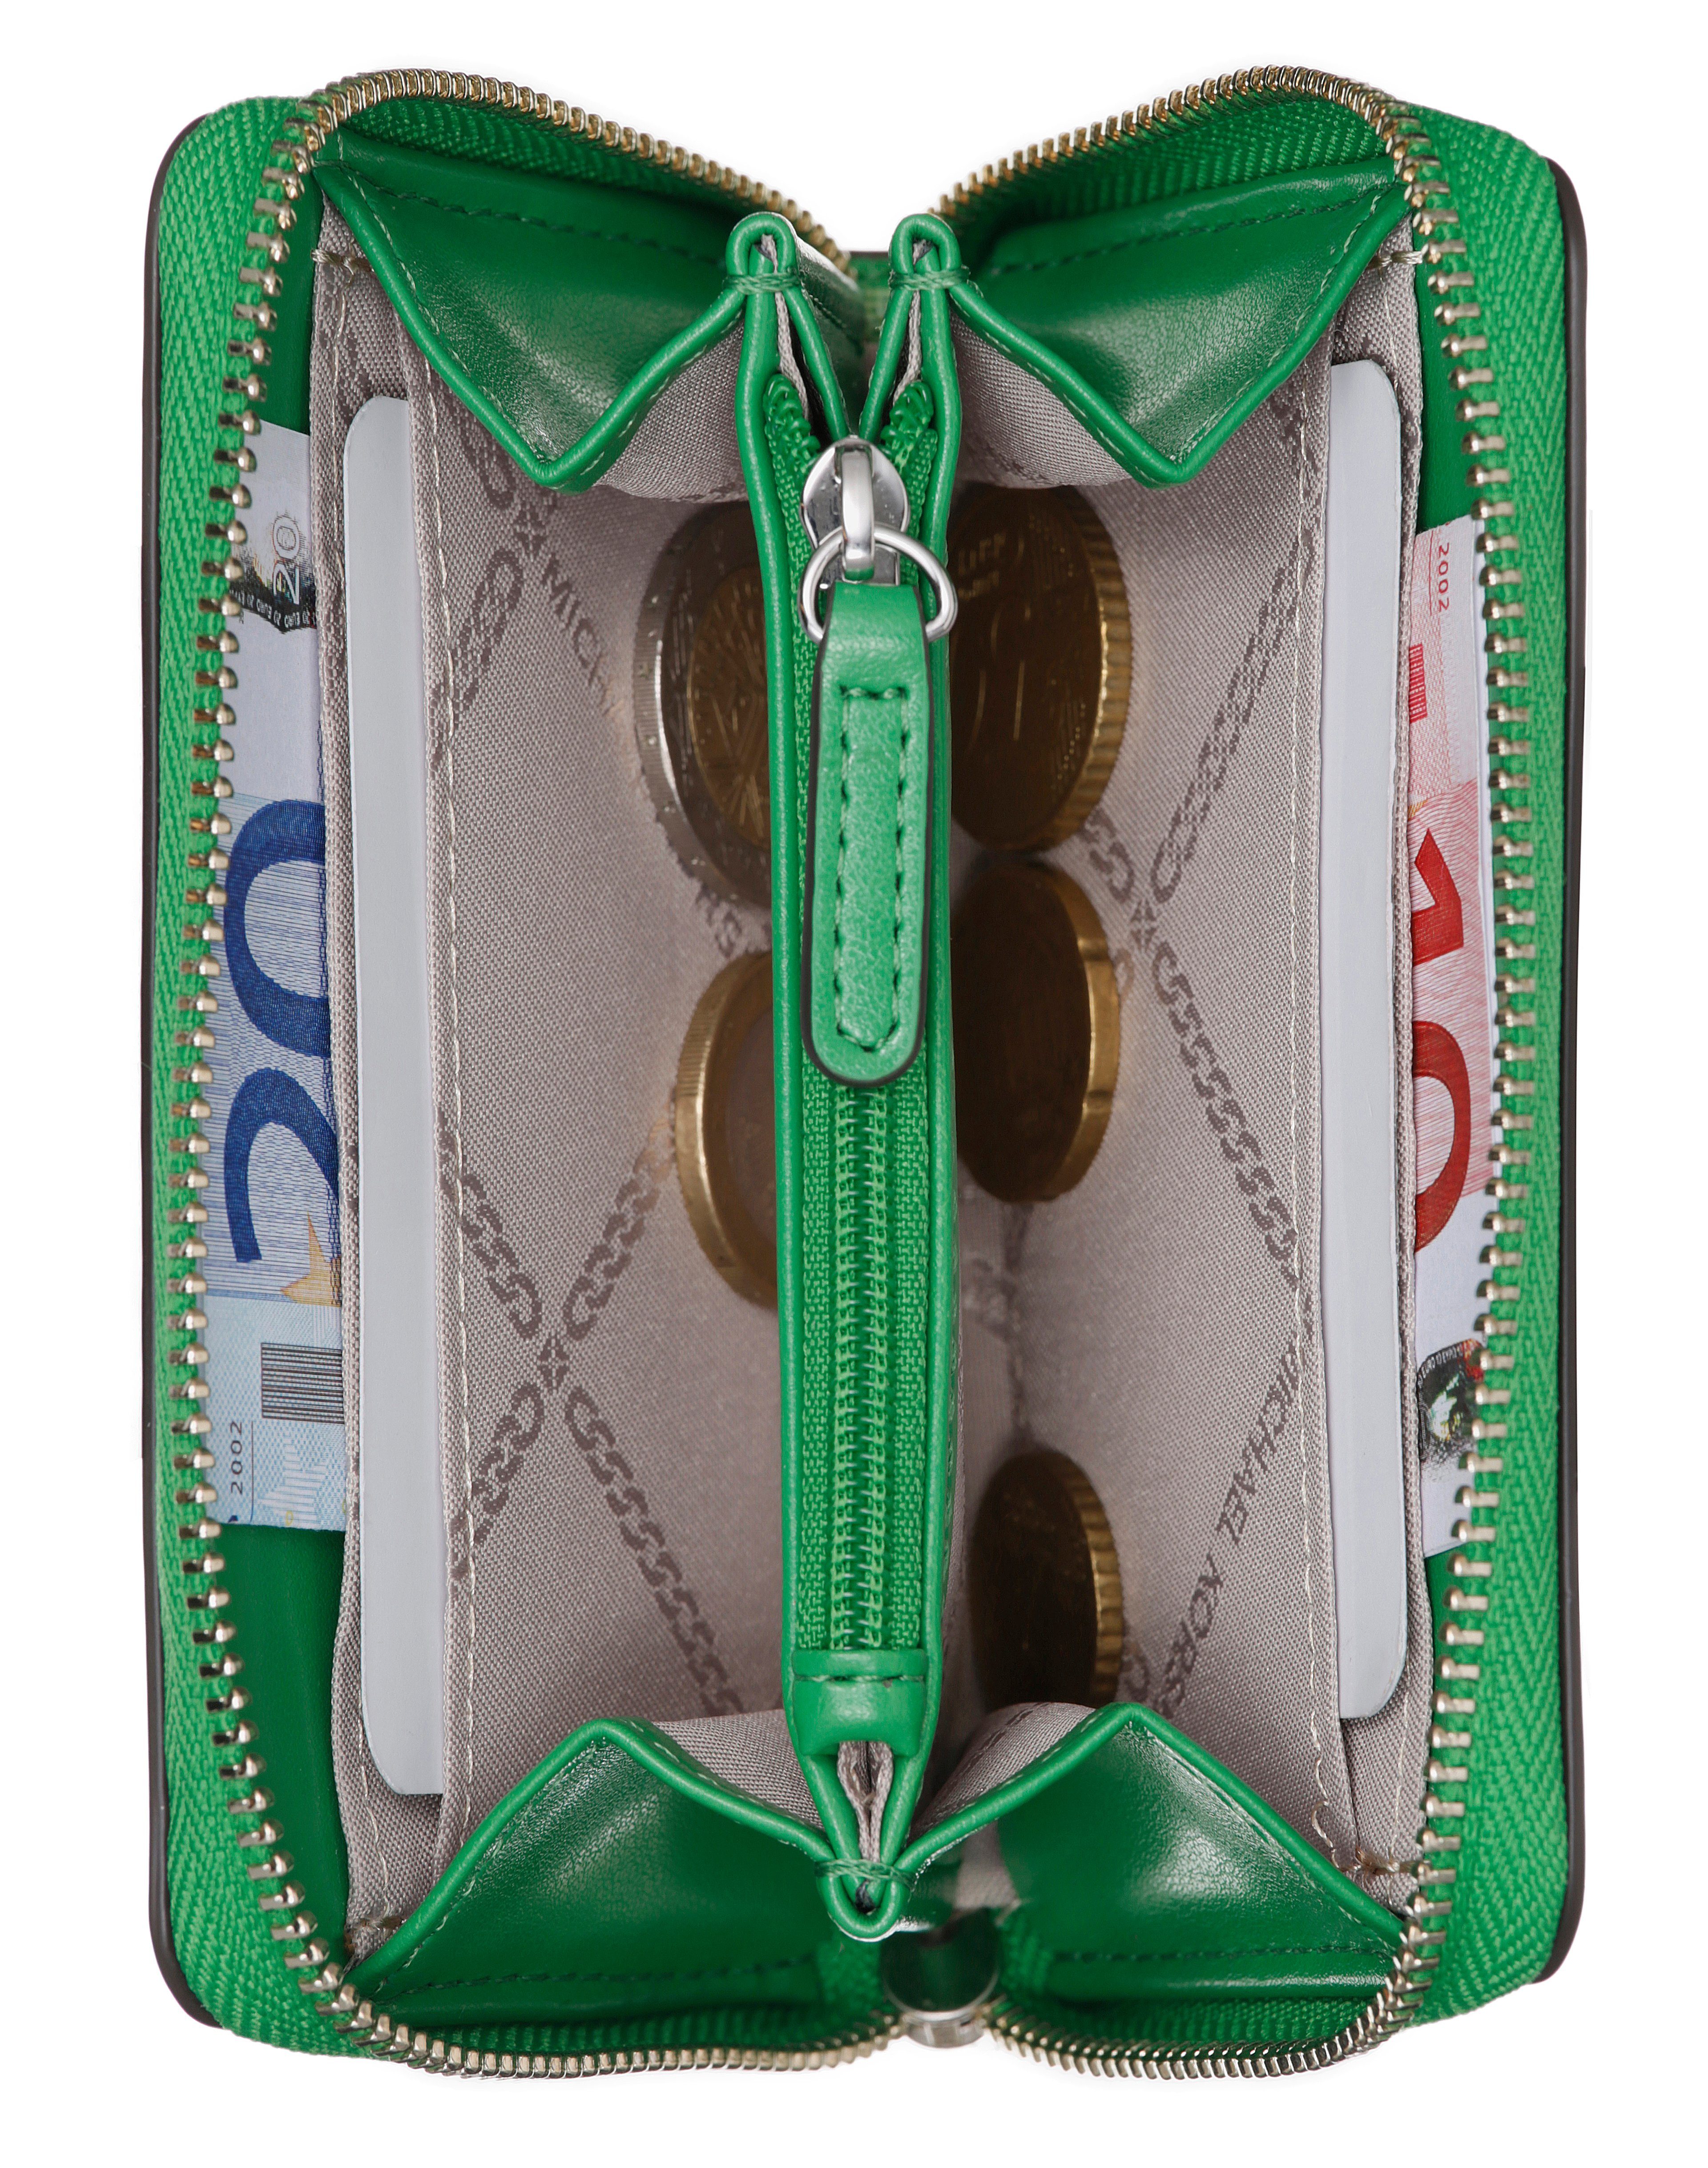 Small, MICHAEL grün Brieftasche KORS mit Logoprint Jet Set